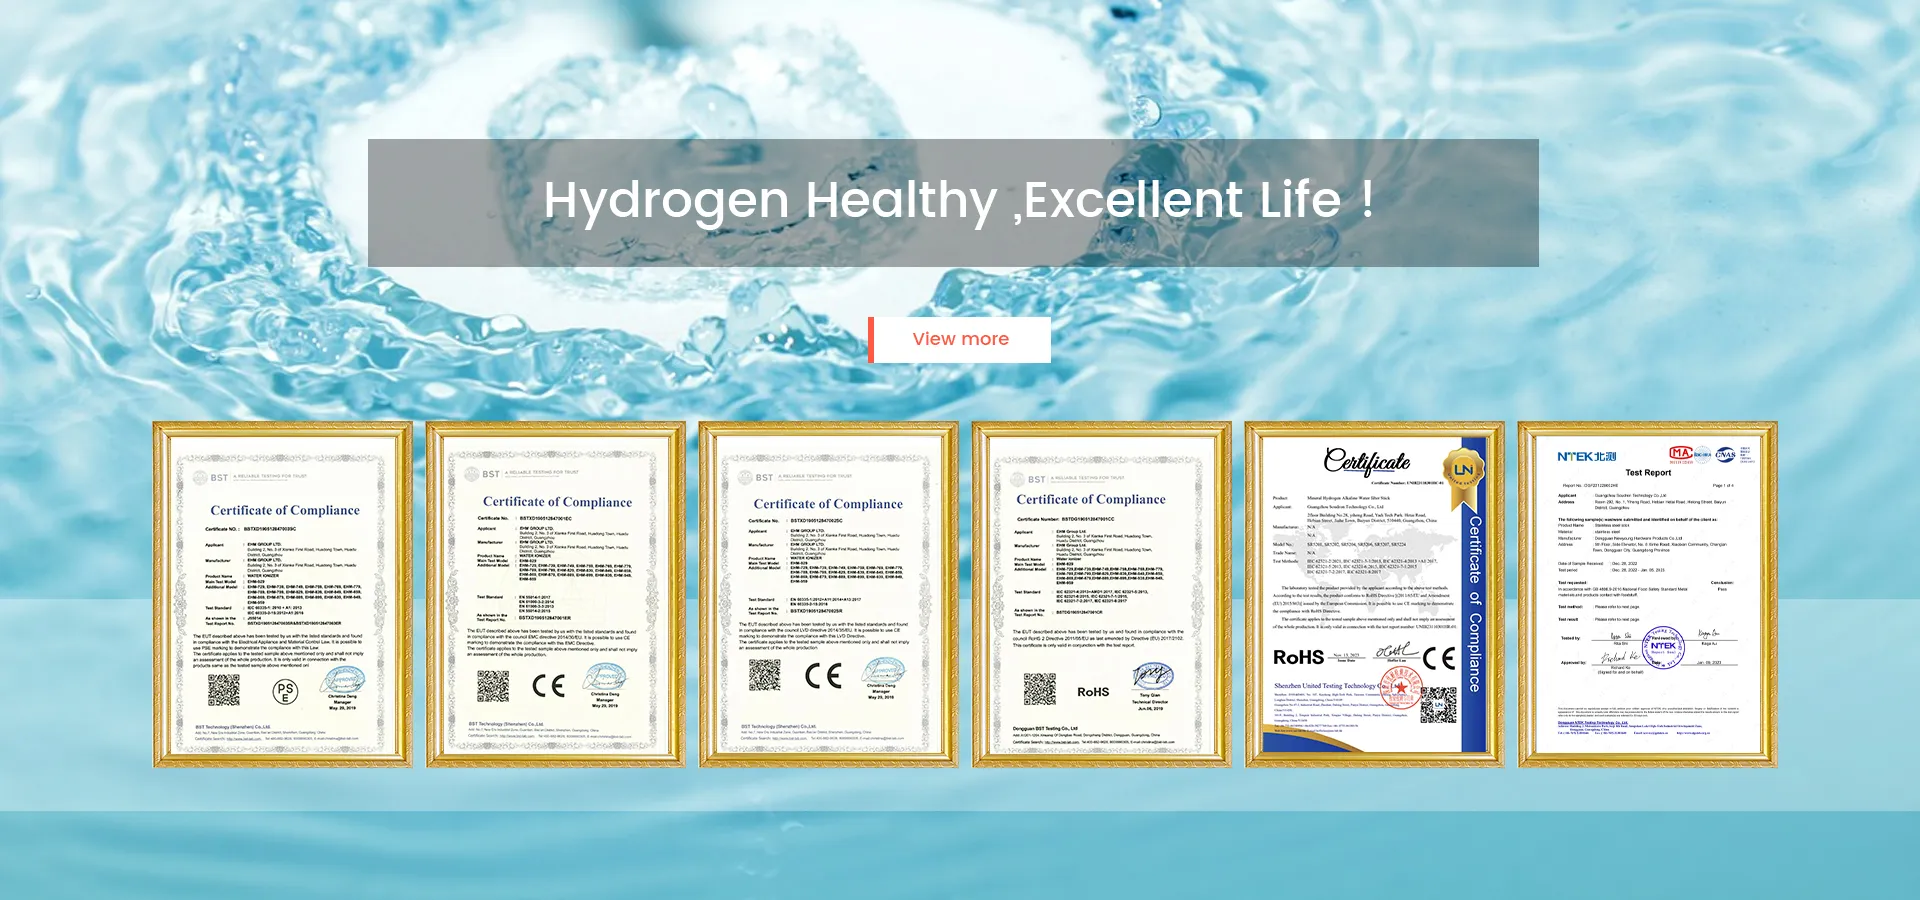 Hydrogen Healthy Excellent Life